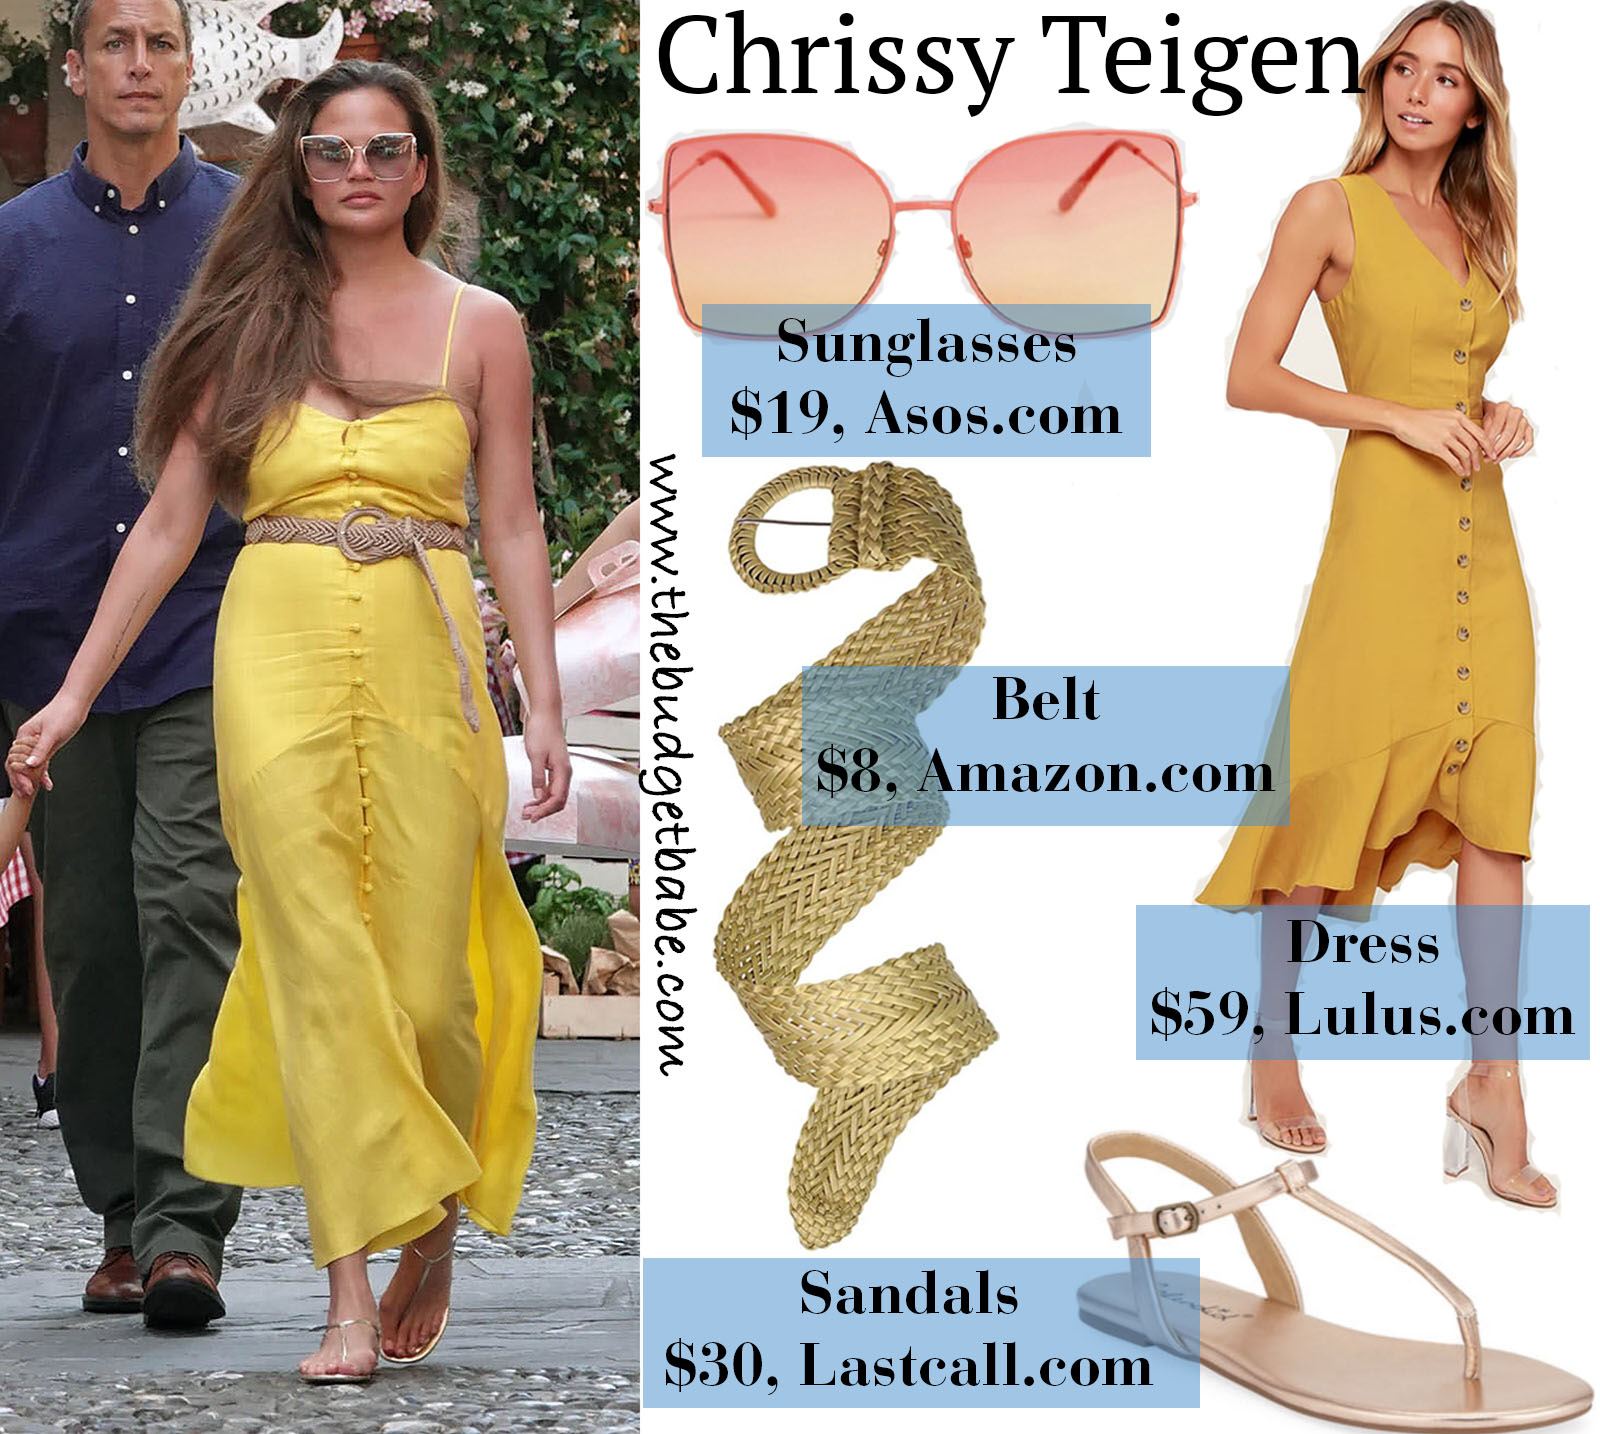 Chrissy Teigen's yellow maxi dress look for less as seen in Portofino